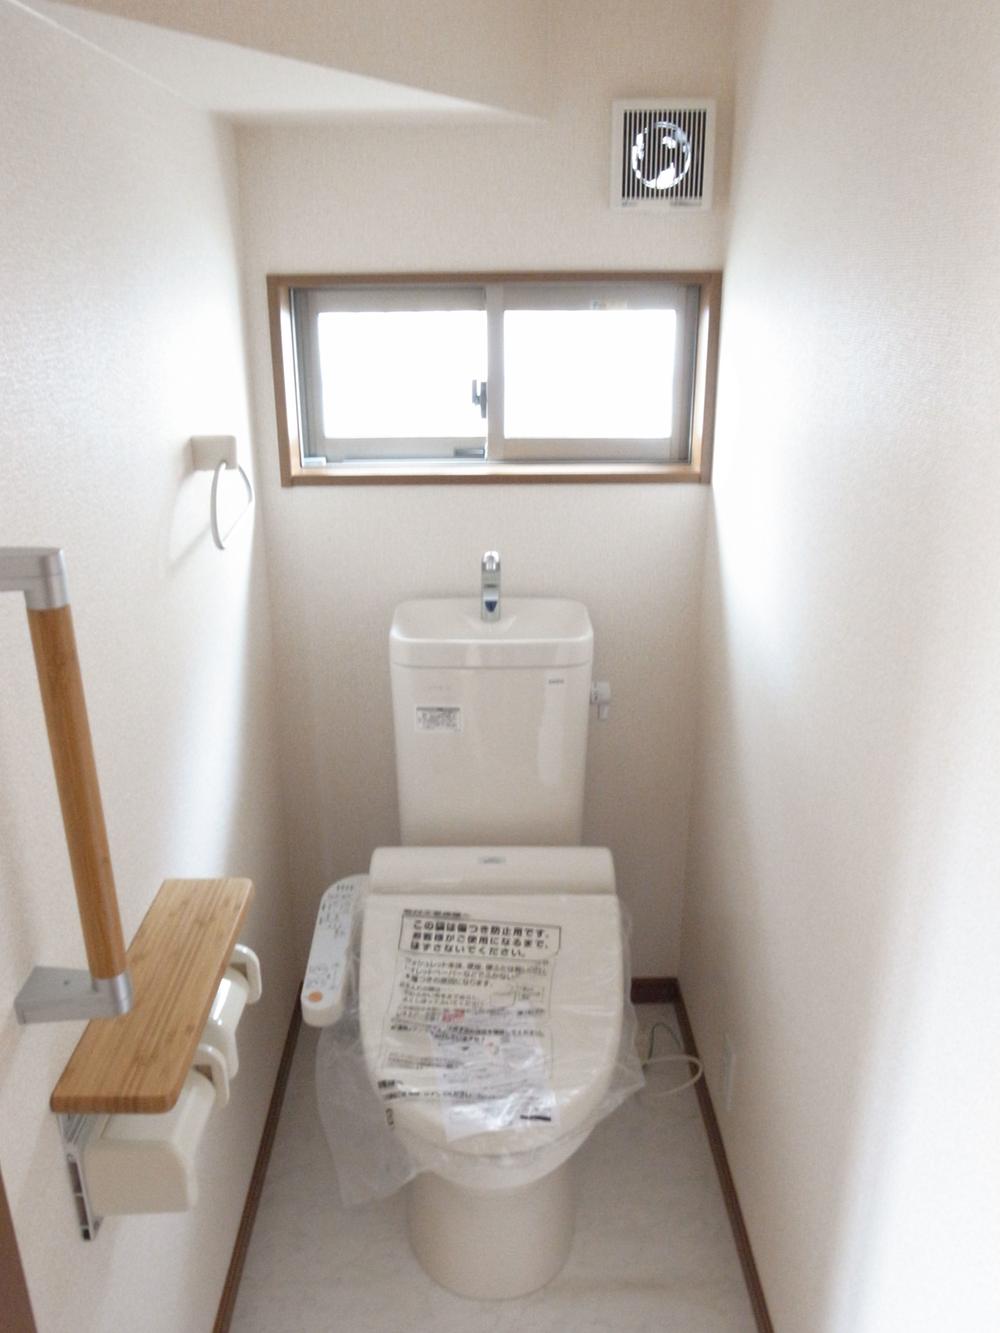 Toilet.  ☆ Is a bidet in both the first floor second floor ☆